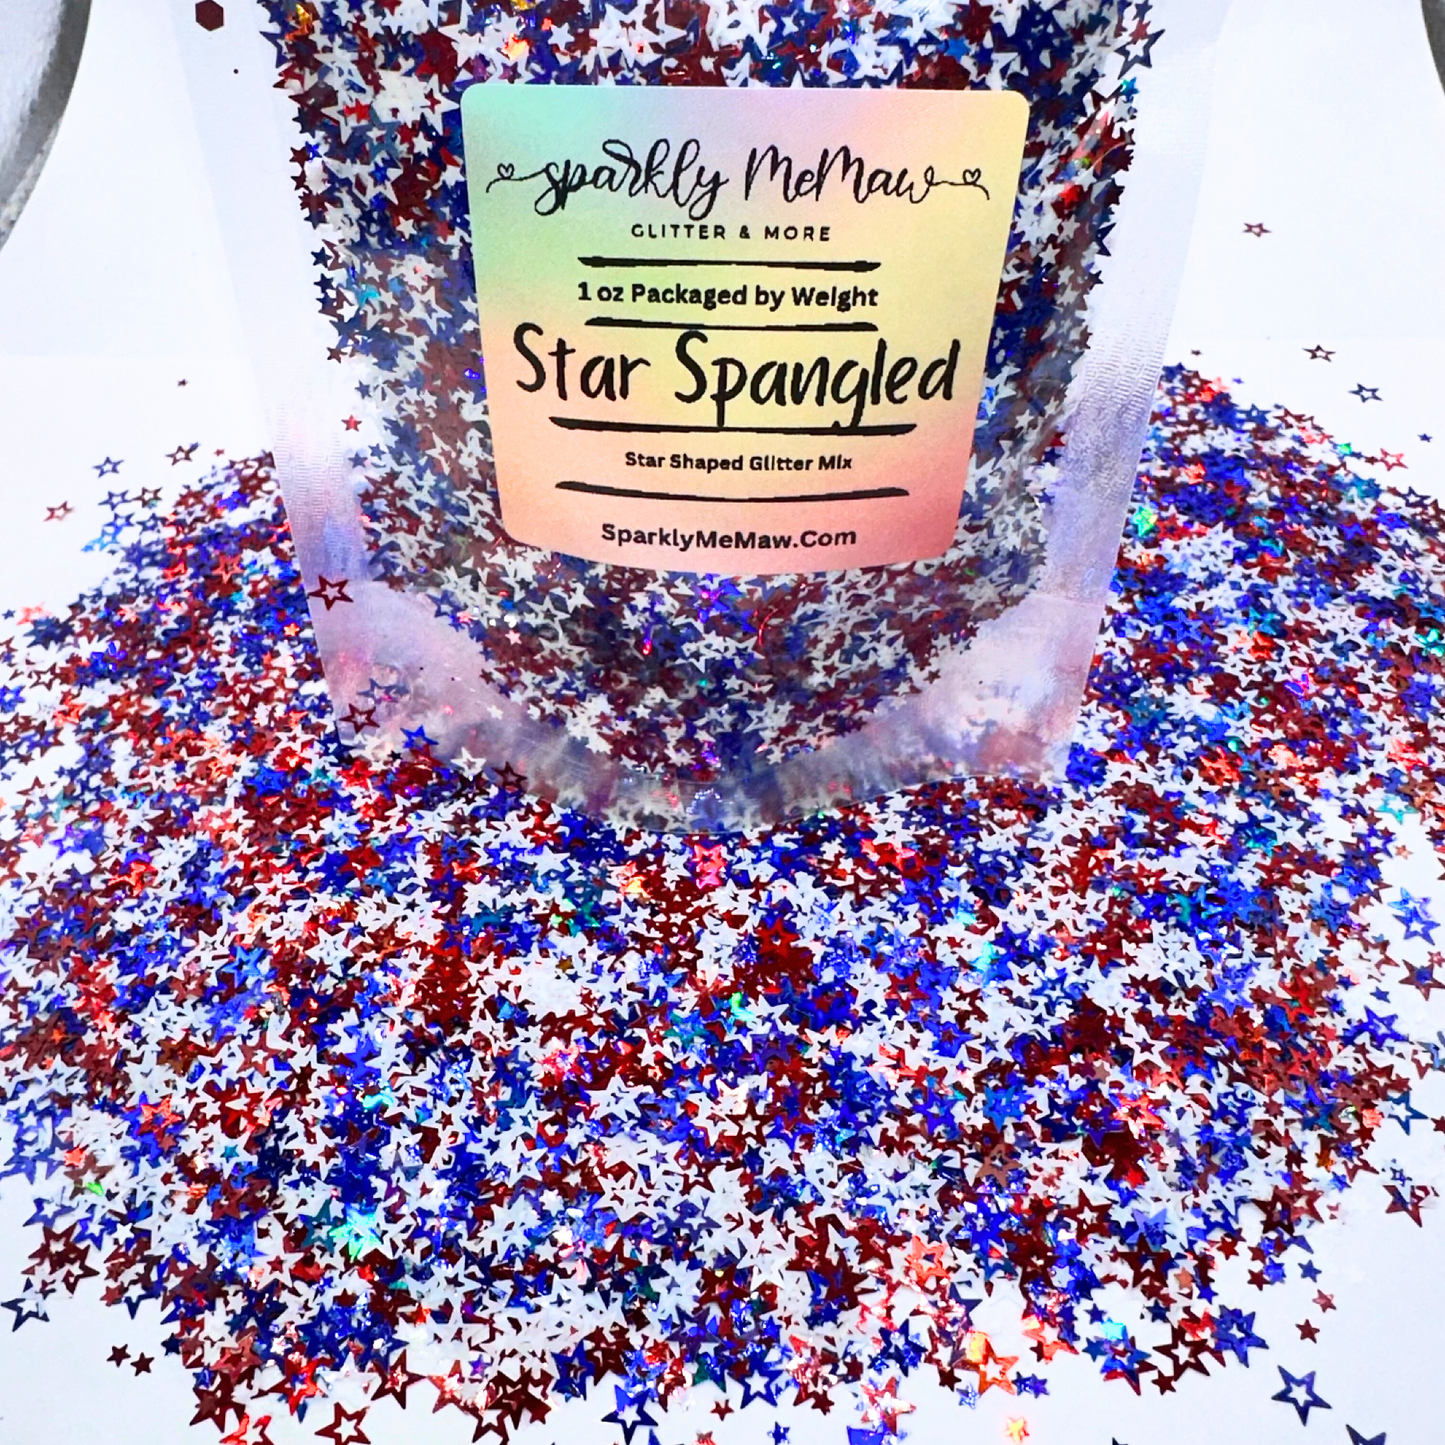 Star Spangled Star Shaped Glitter Mix